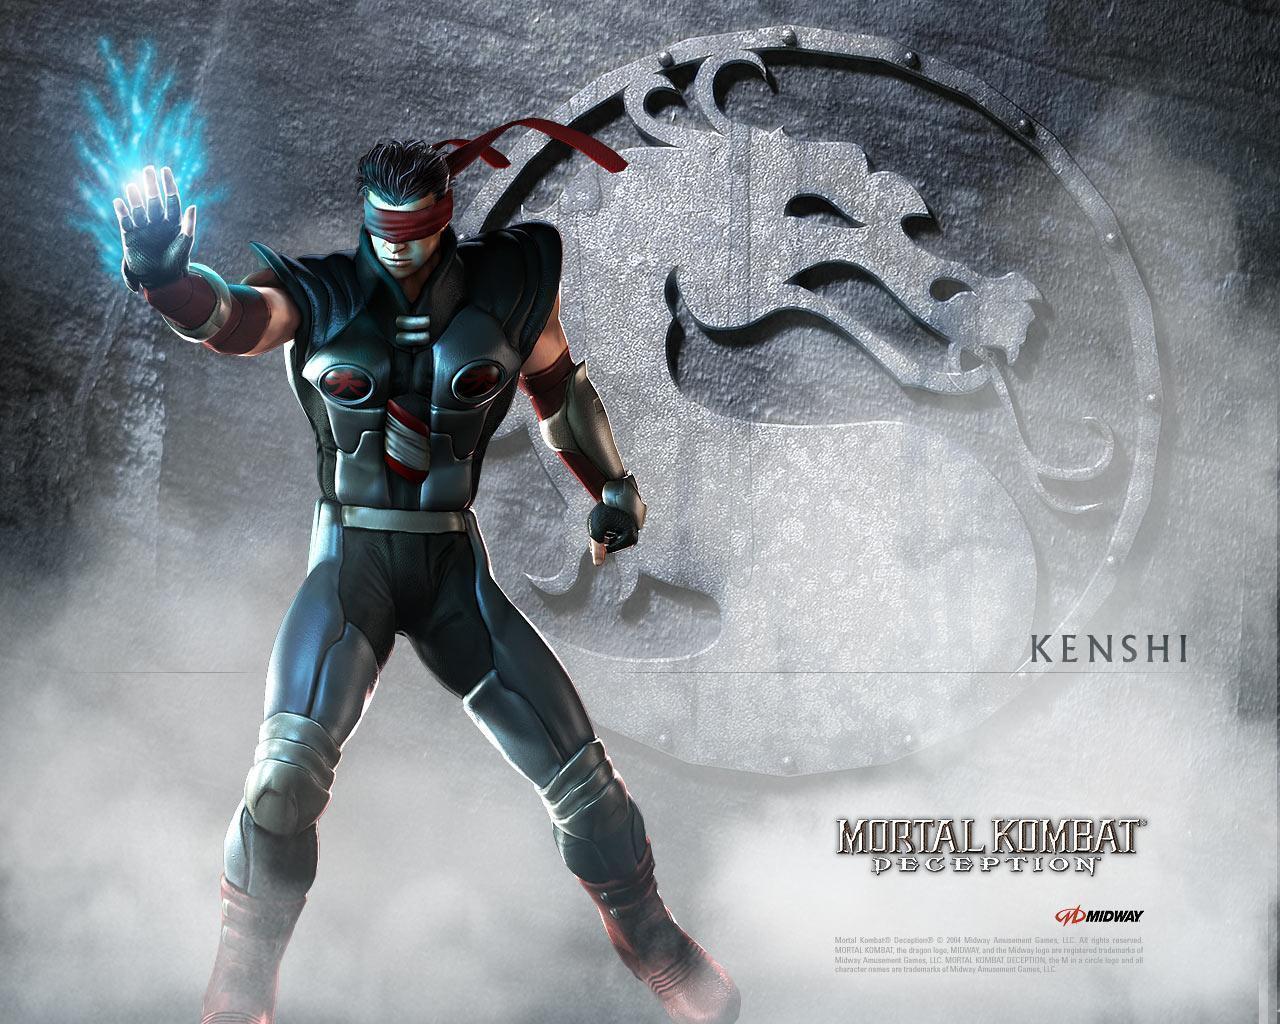 Mortal Kombat image Kenshi HD wallpaper and background photo